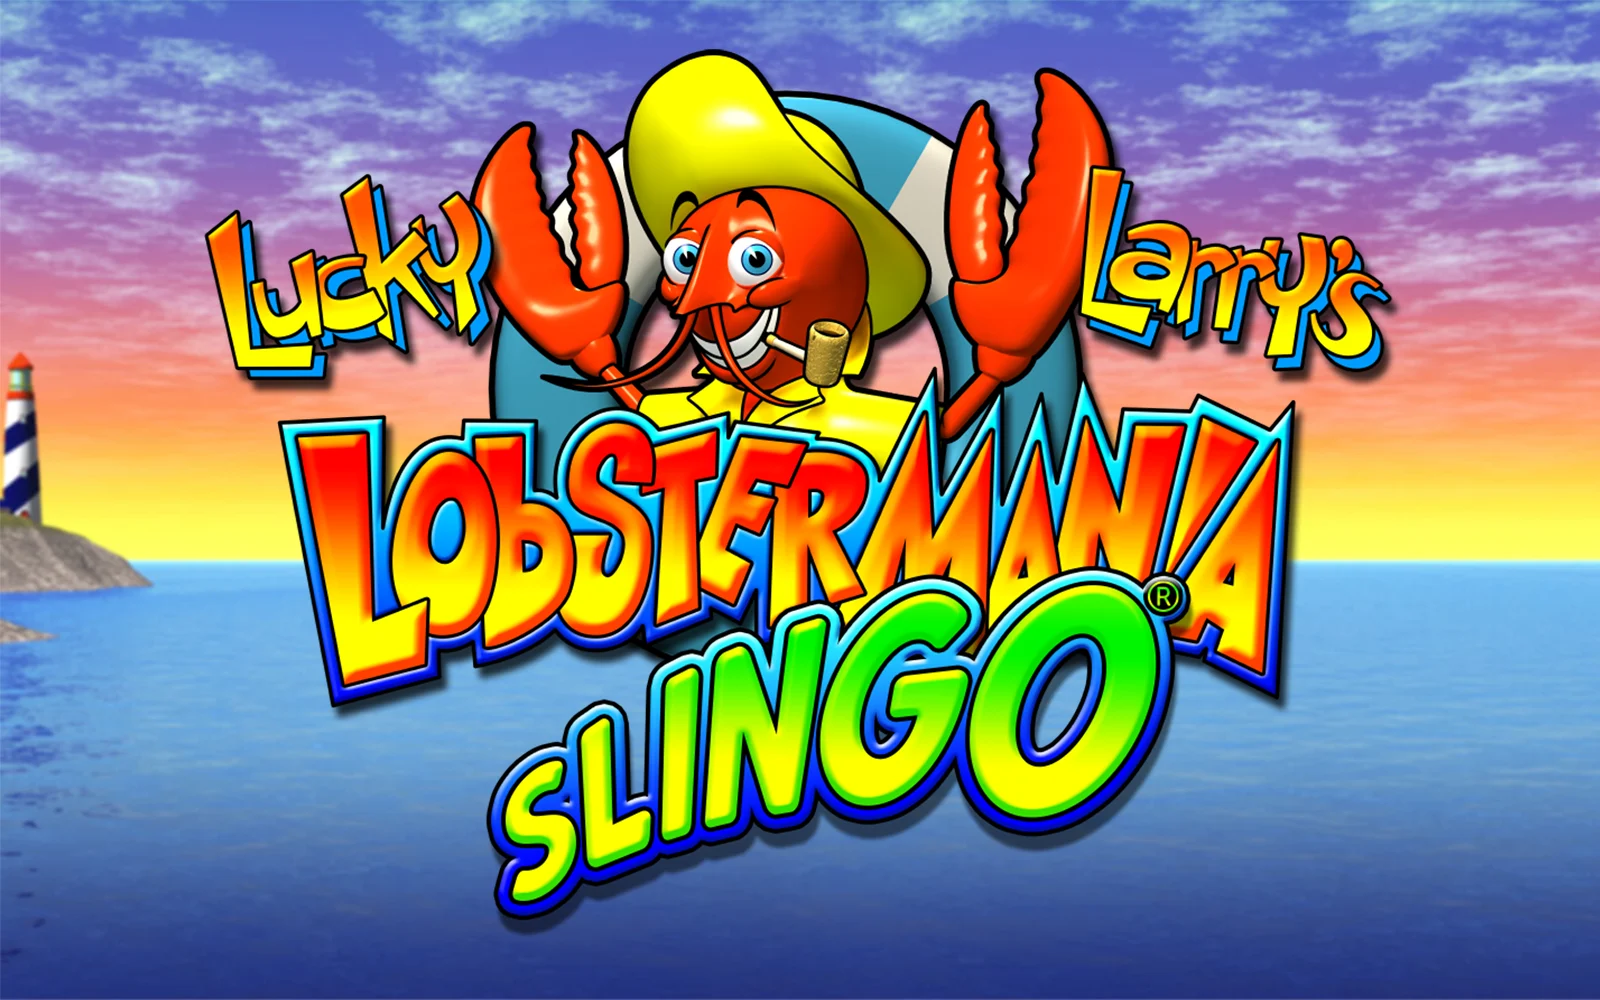 Joacă Lucky Larry's Lobstermania Slingo în cazinoul online Starcasino.be